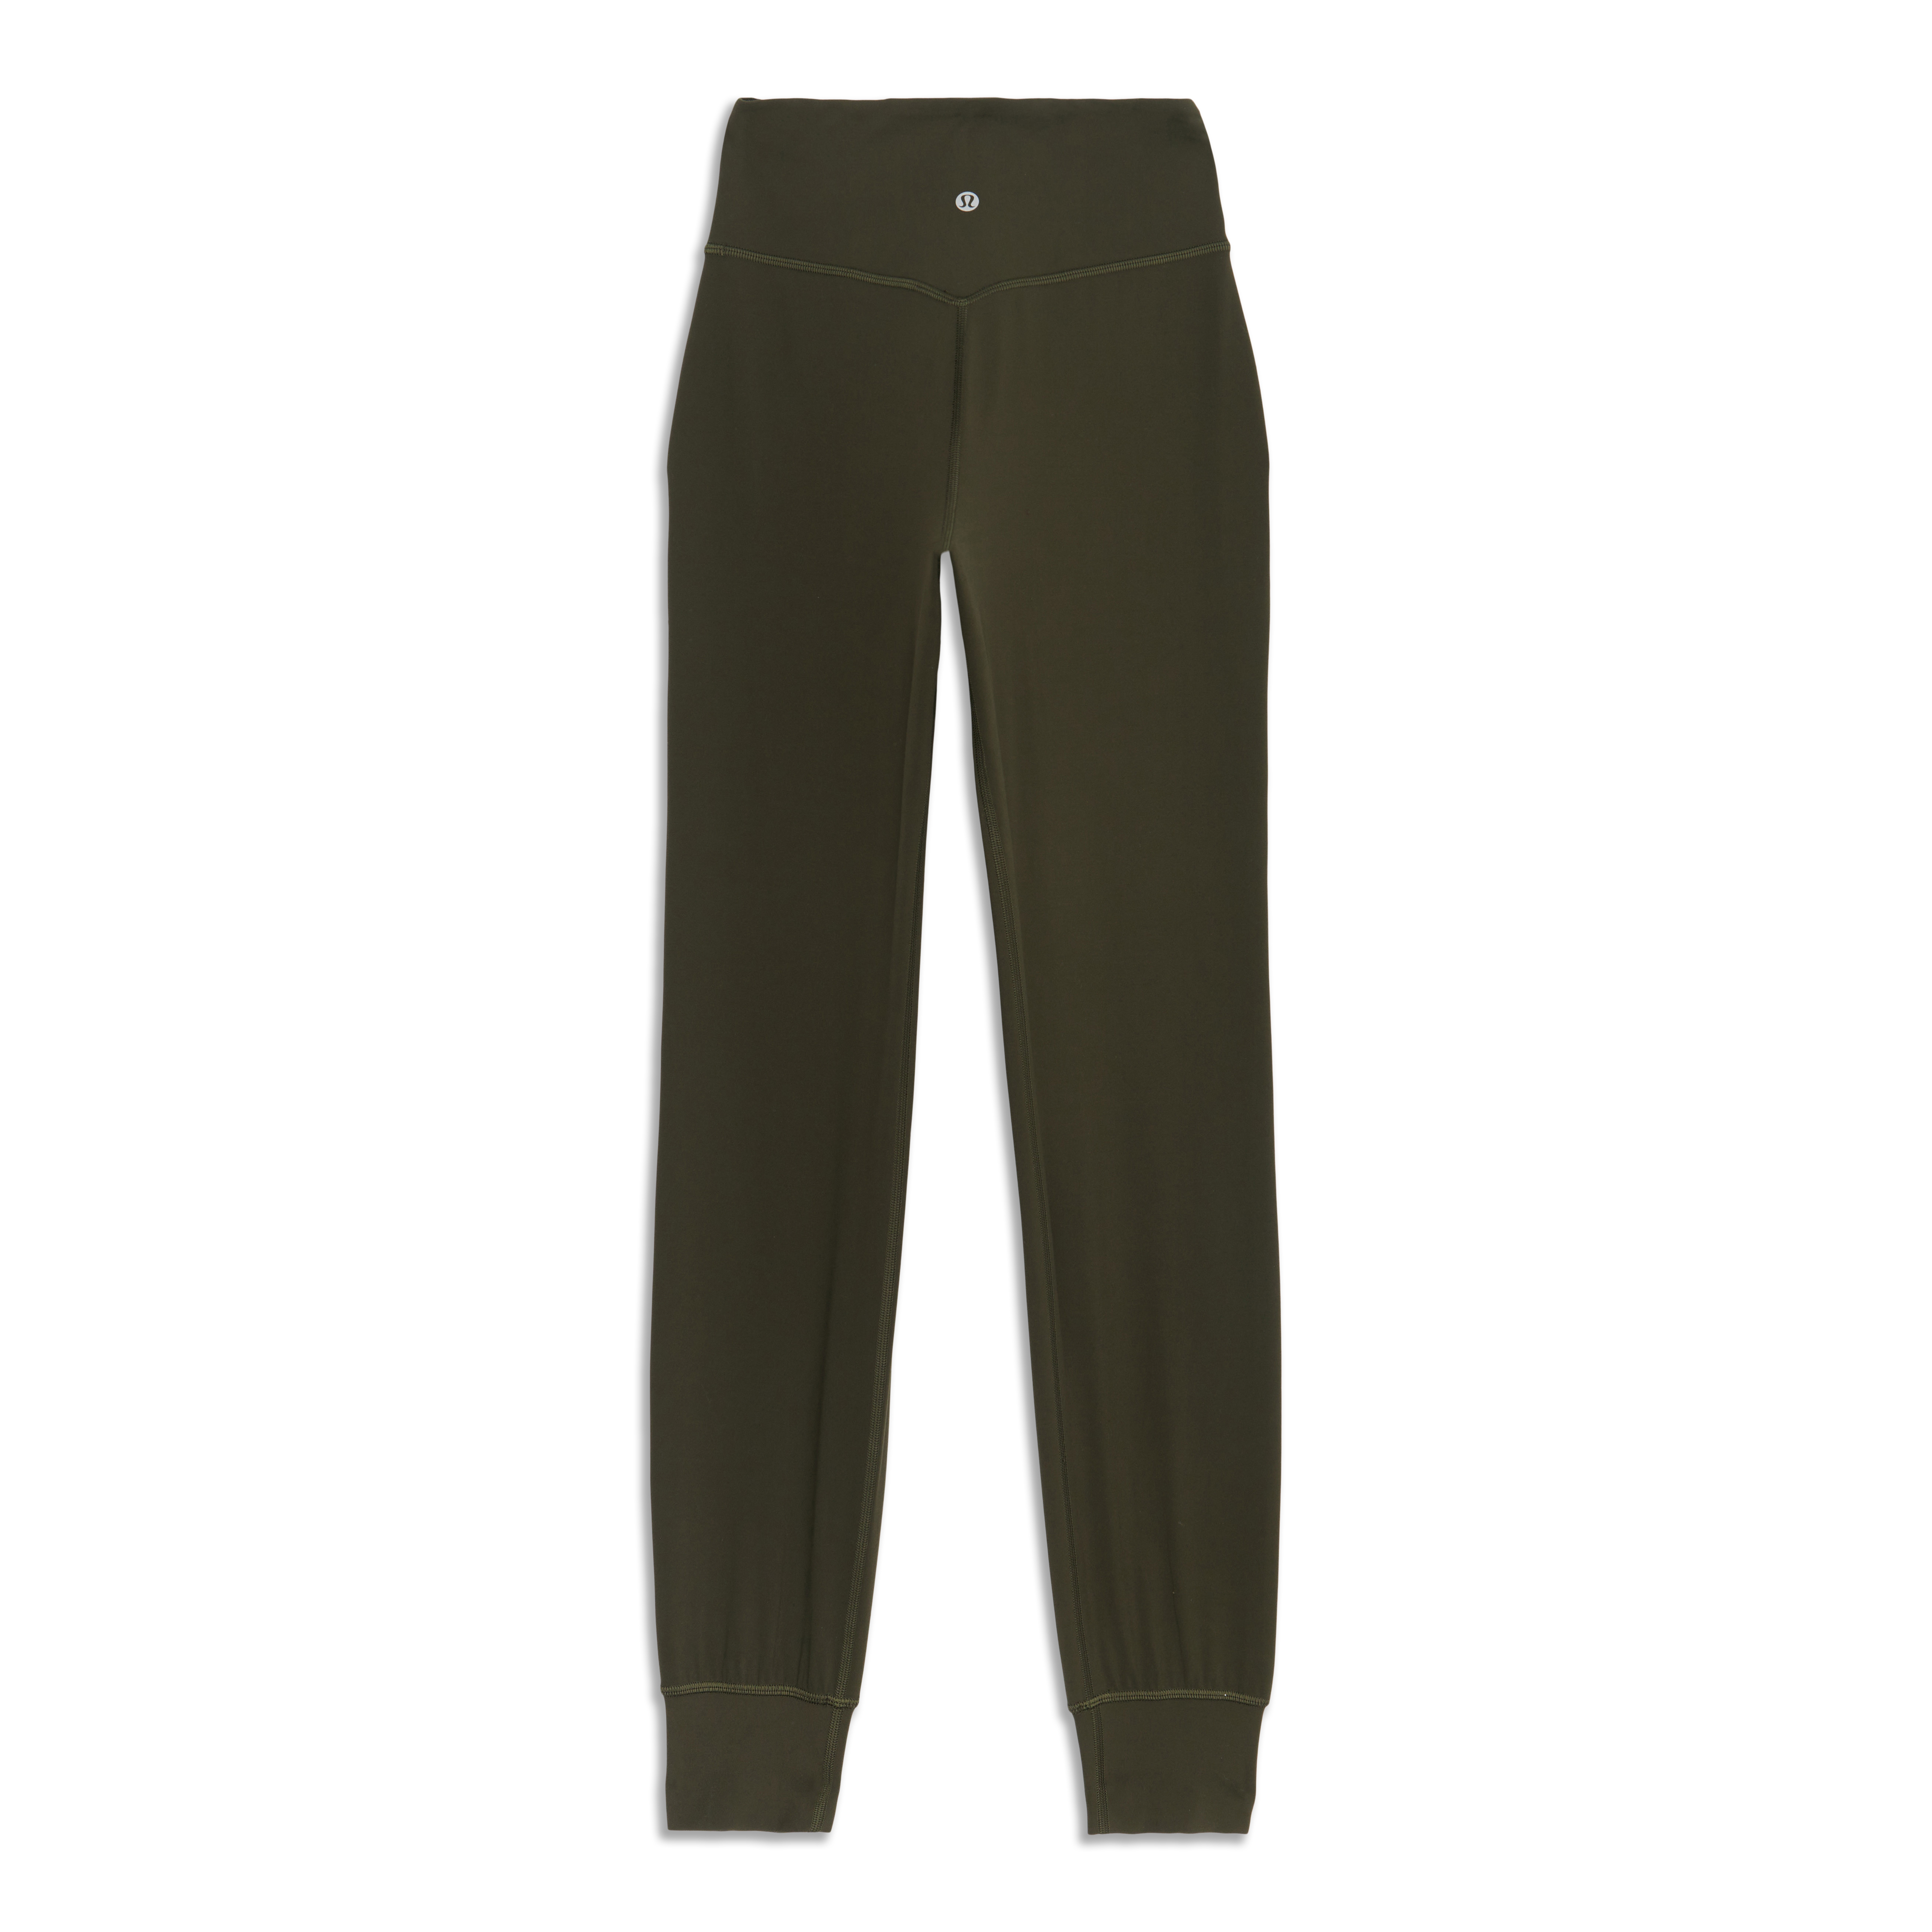 Lululemon Align Joggers Black Size 10 - $58 (50% Off Retail) - From Ashlyn